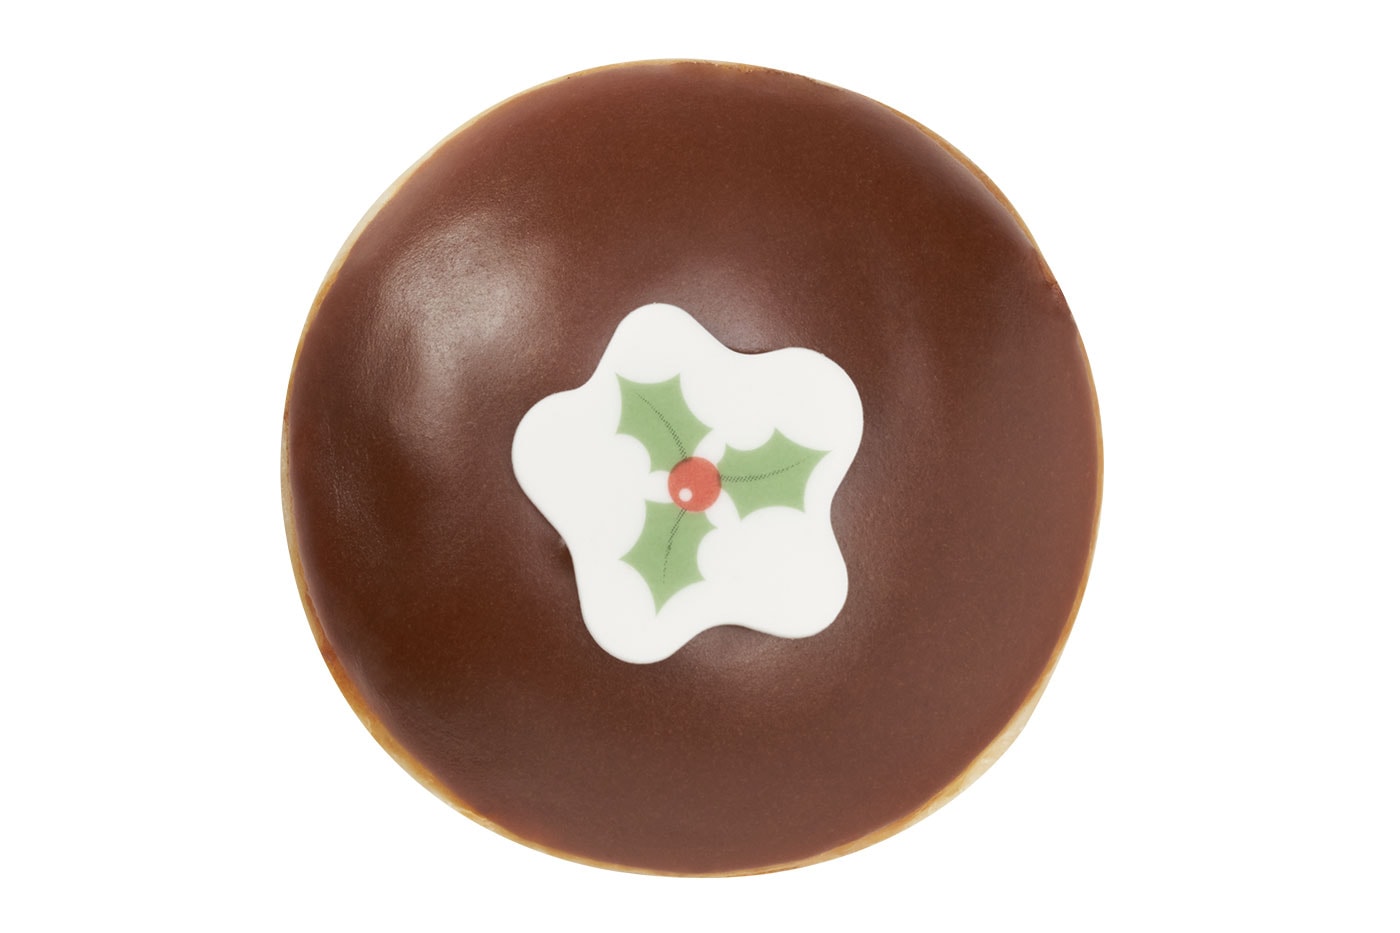 Krispy Kreme Christmas 2021 Doughnuts announcement Doughman Sprinkle Bells Tree Yo’self So Good Pud Dozen Creations Kit Piped Say Merry Christmas Half Dozen 